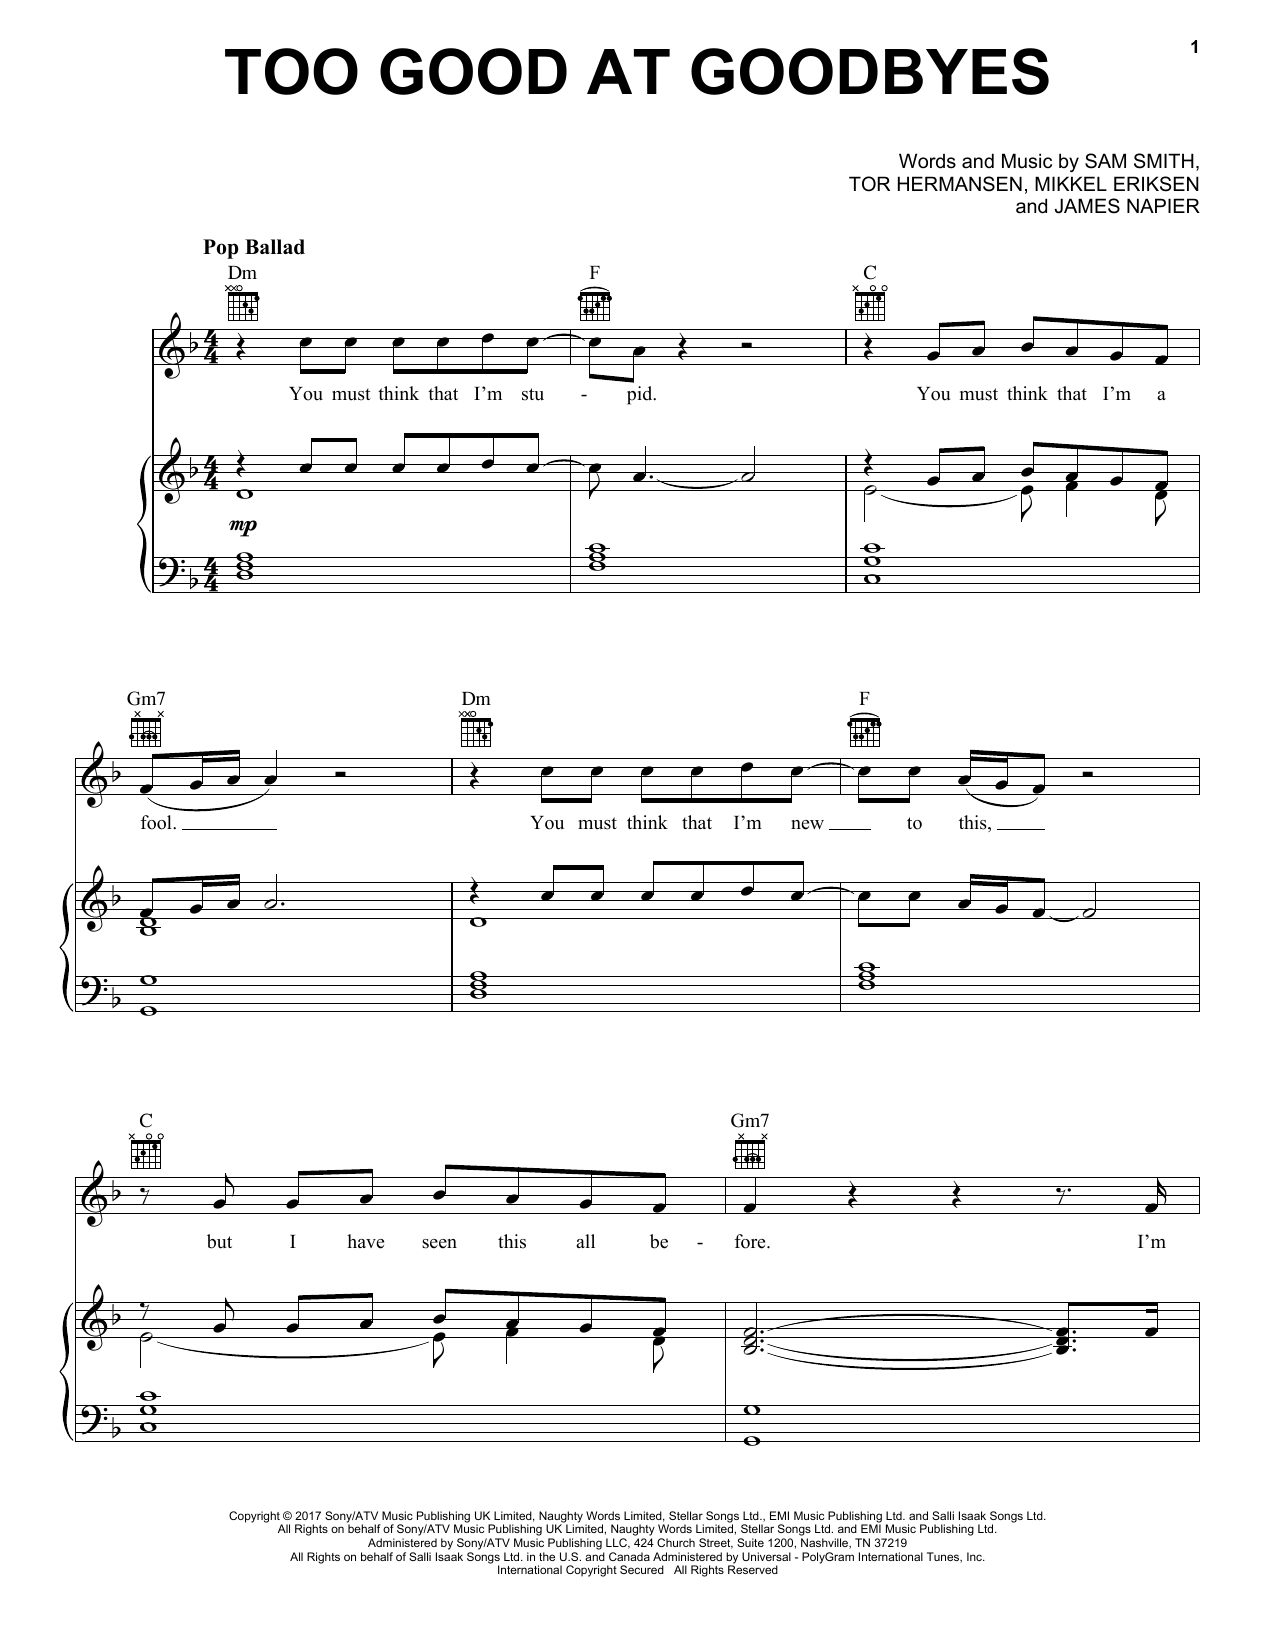 Sam Smith Too Good At Goodbyes Sheet Music Notes & Chords for Big Note Piano - Download or Print PDF